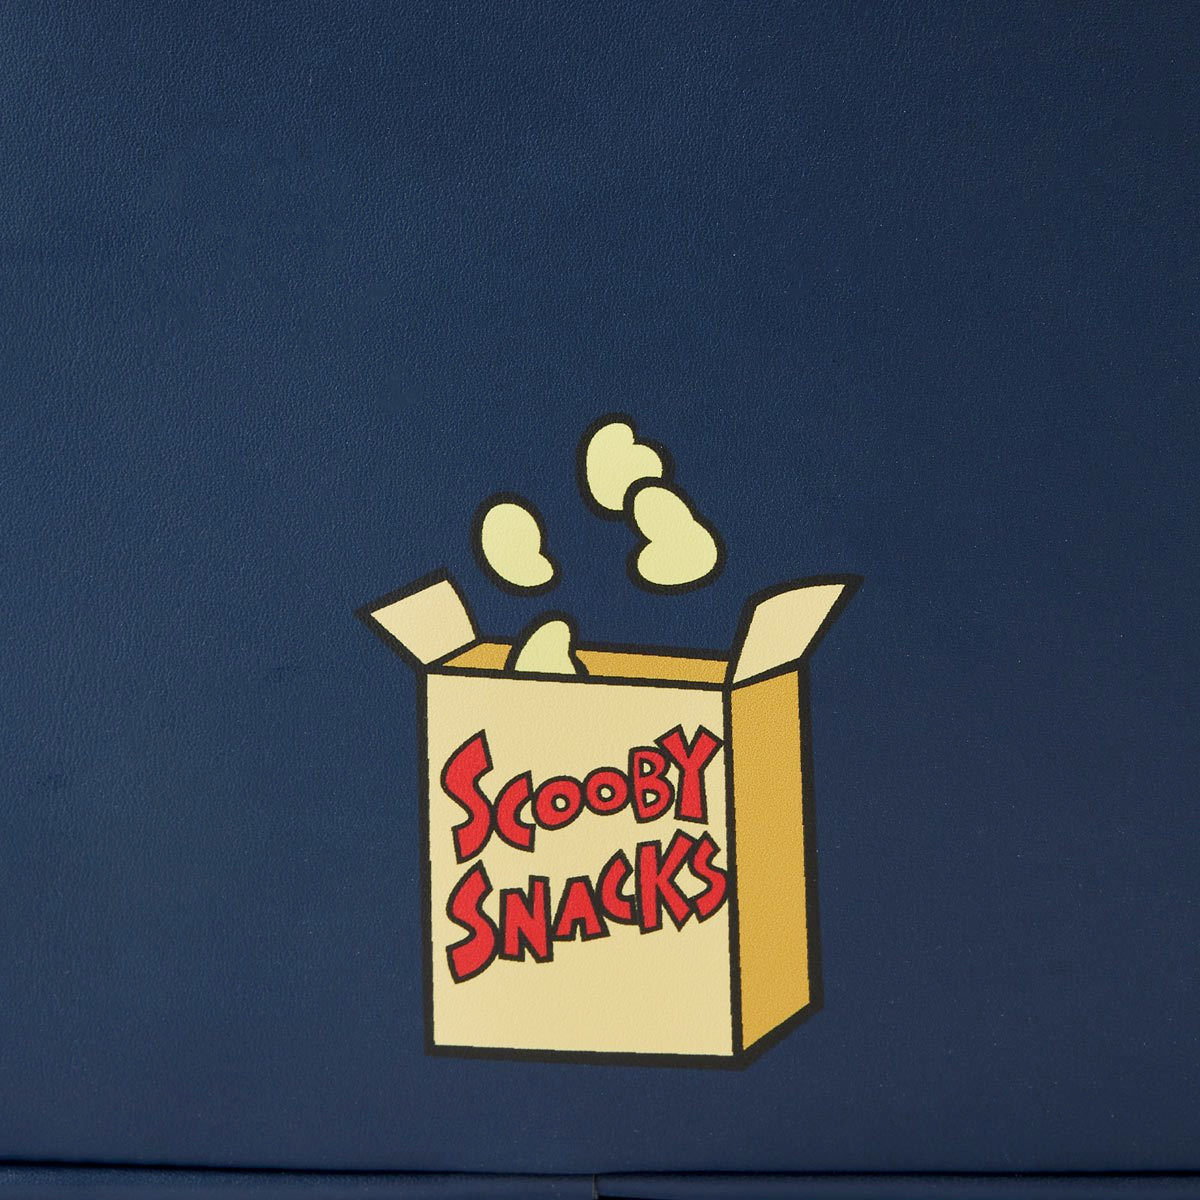 Warner Bros. 100th Anniversary Looney Tunes x Scooby-Doo Mash-Up Mini-Backpack